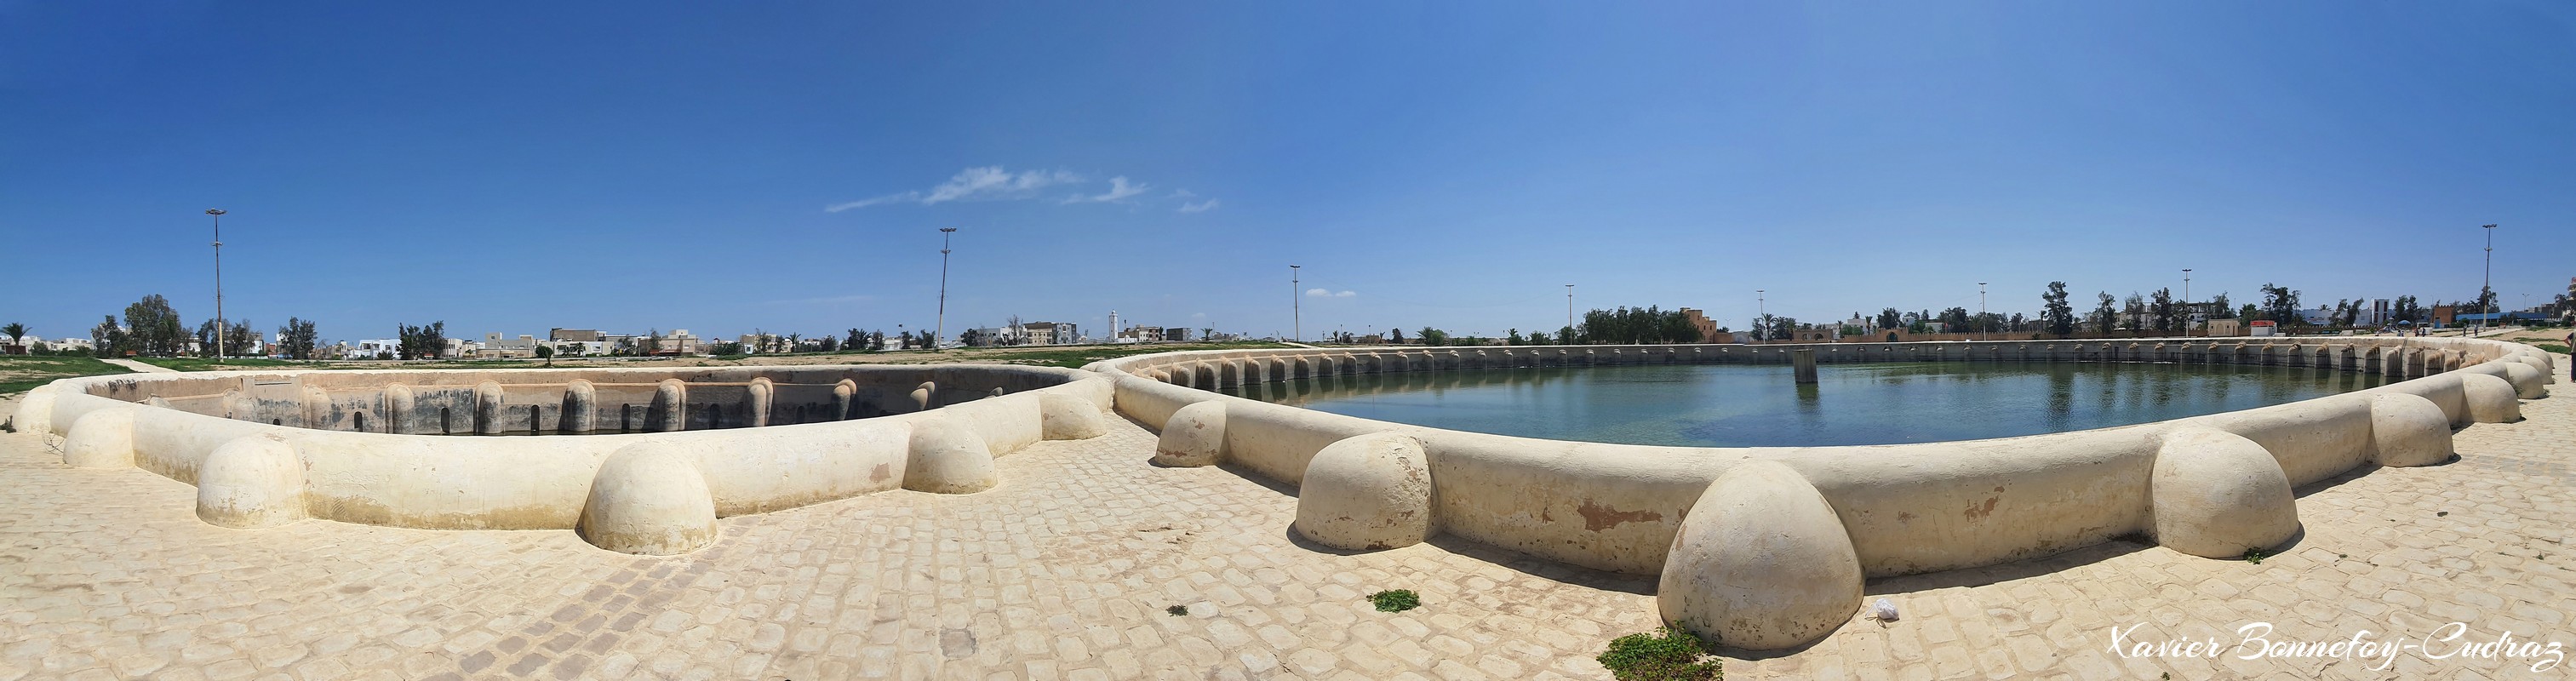 Kairouan - Bassins des Aghlabides - panorama
Mots-clés: TUN Tunisie Kairouan patrimoine unesco Bassins des Aghlabides panorama